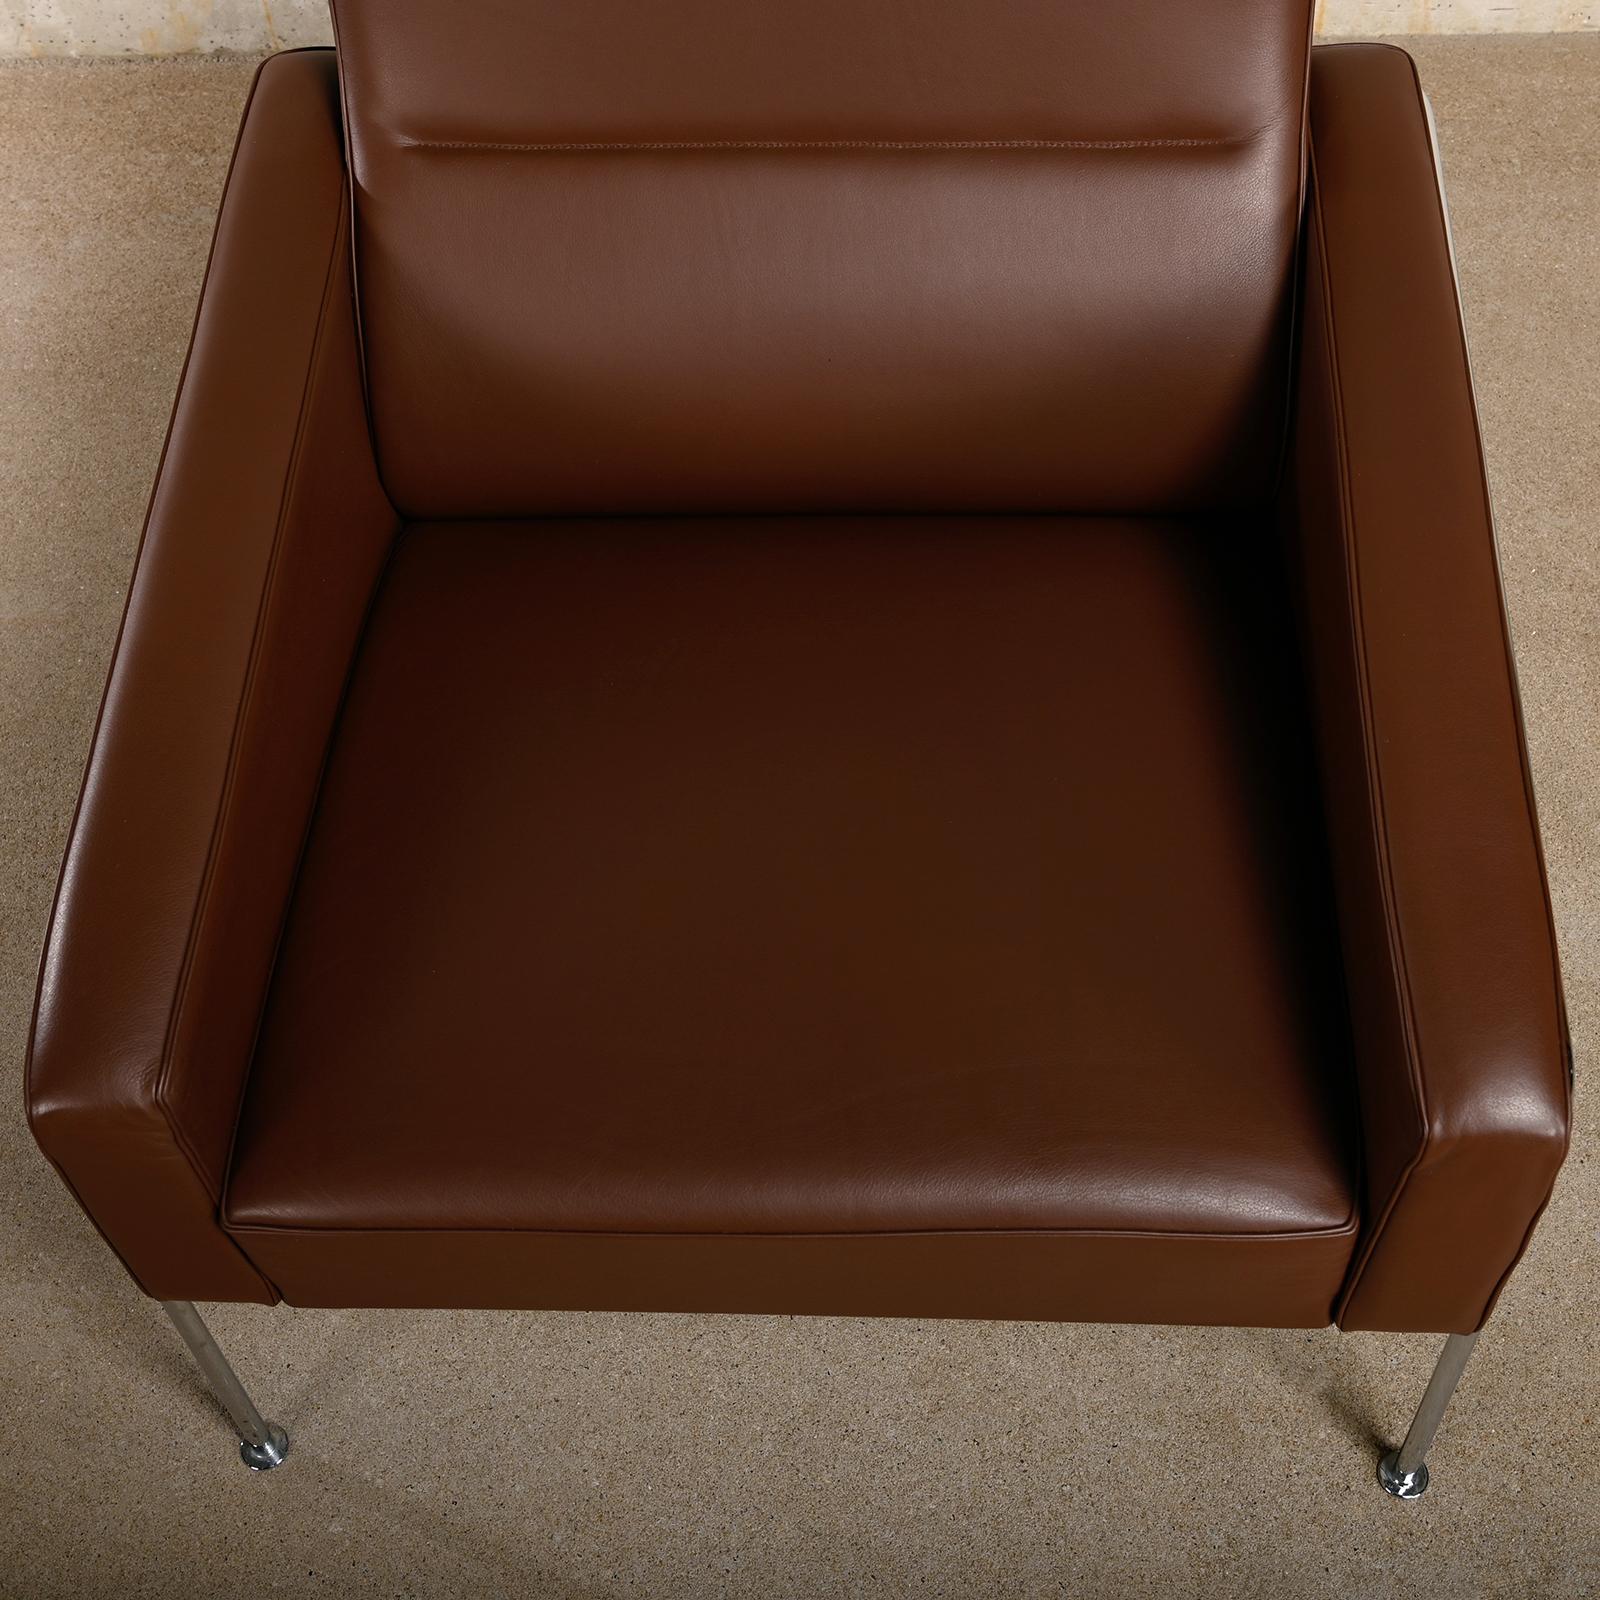 Arne Jacobsen Lounge Chair 3300 Series in Chestnut leather for Fritz Hansen For Sale 1